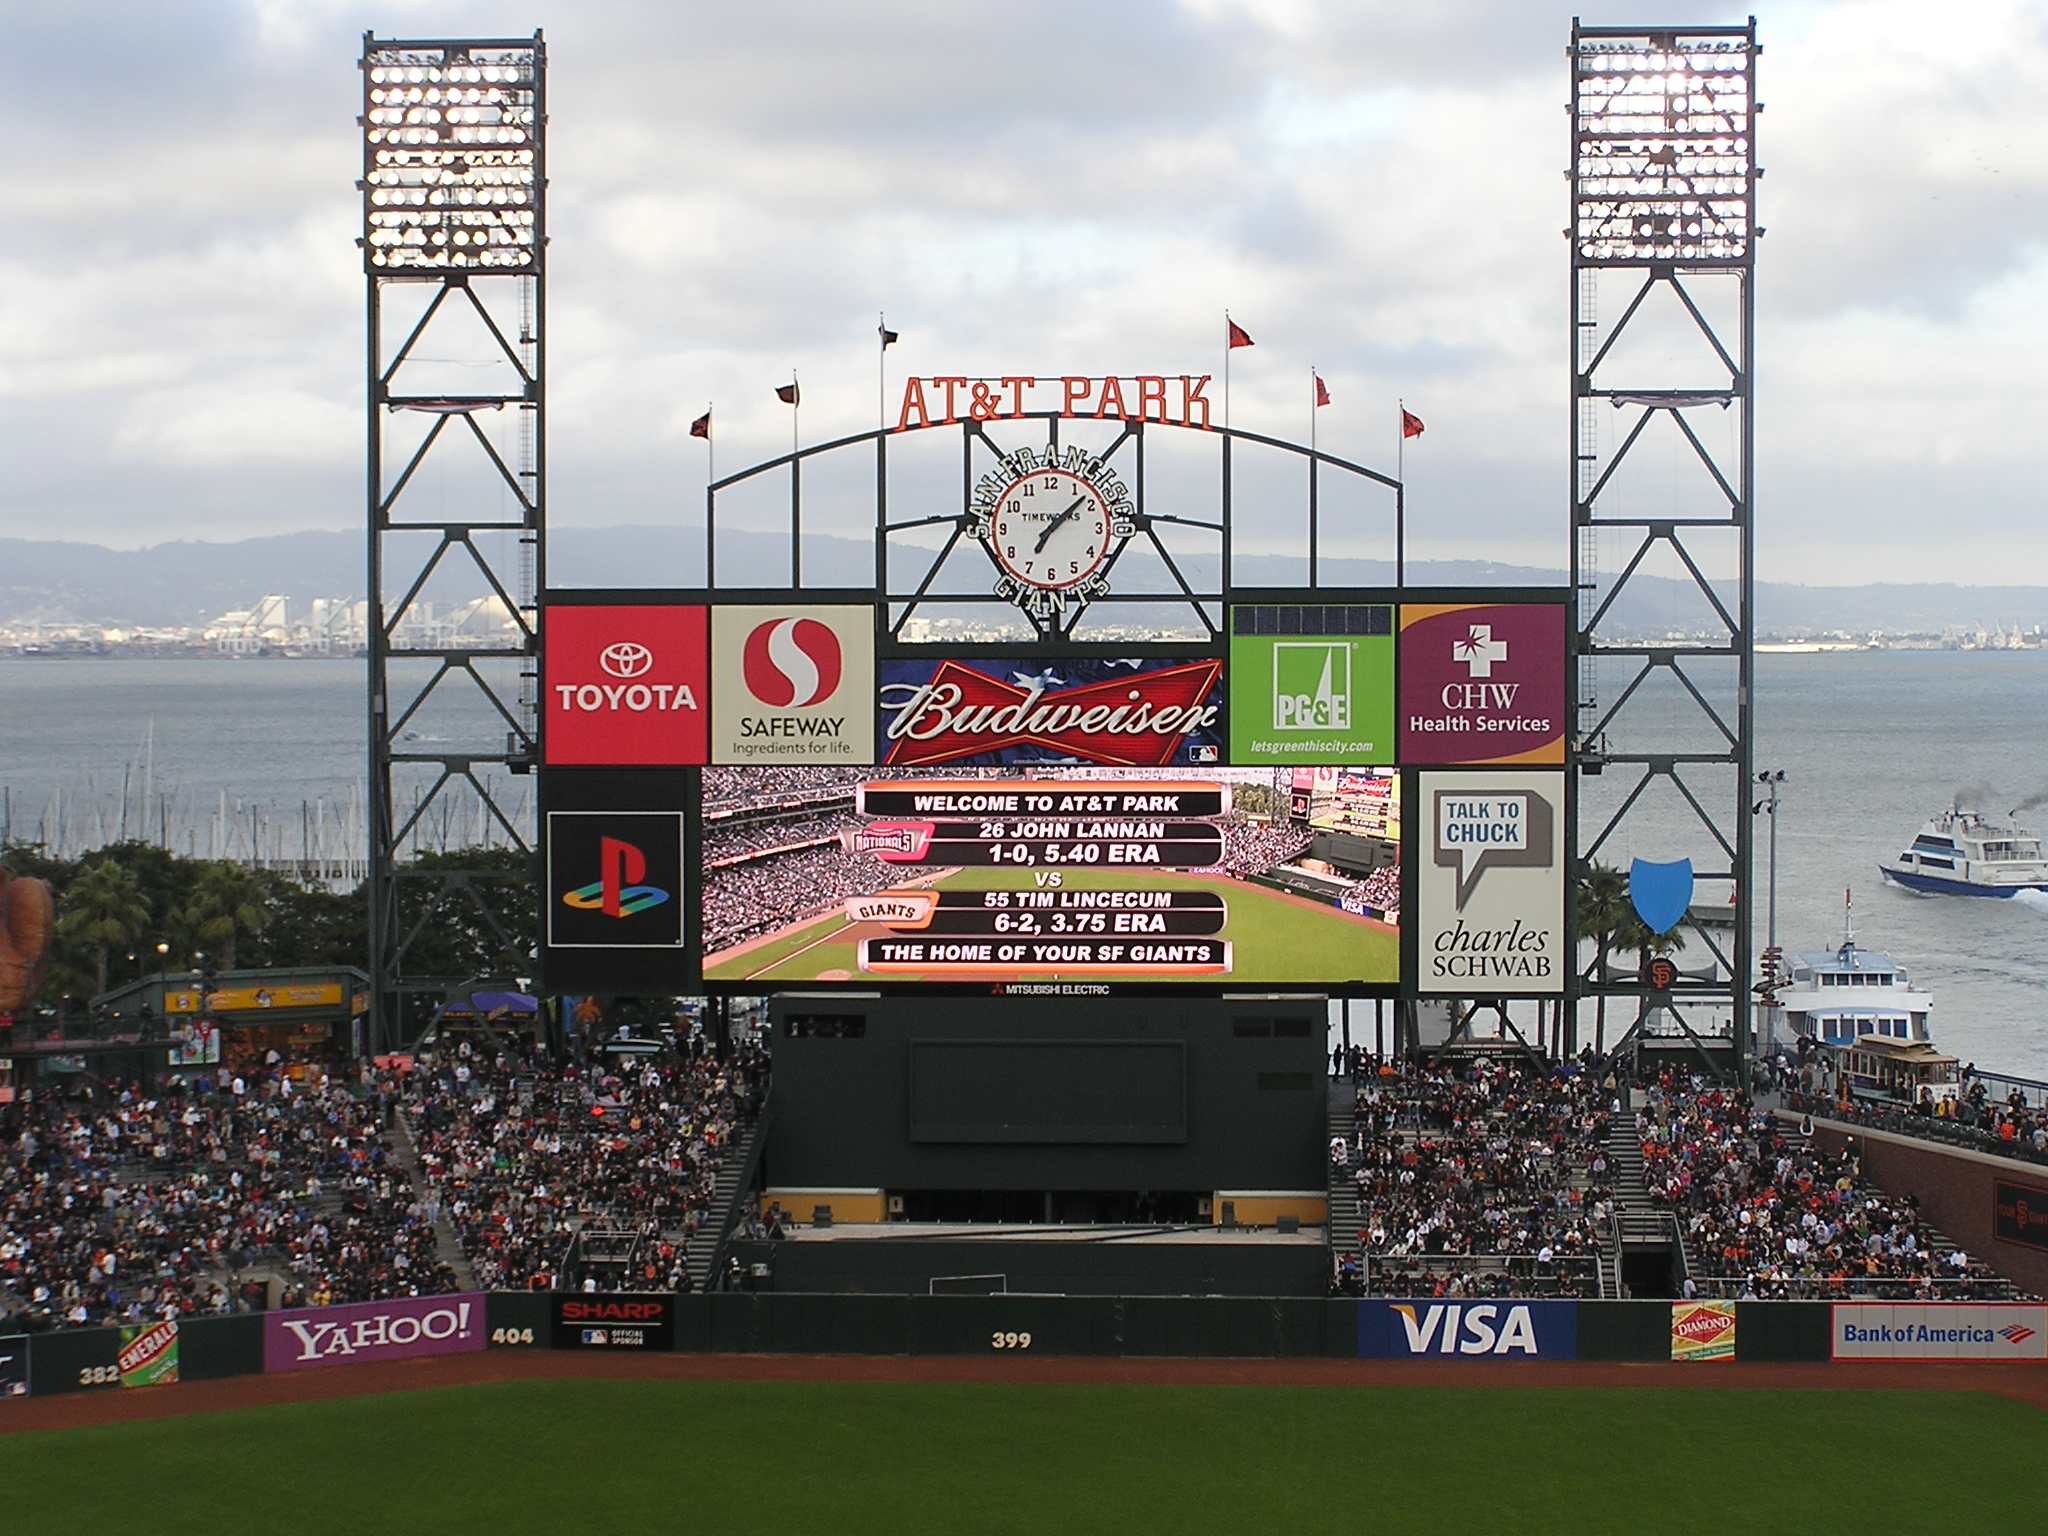 A beautiful scoreboard - AT&T Park, San Francisco